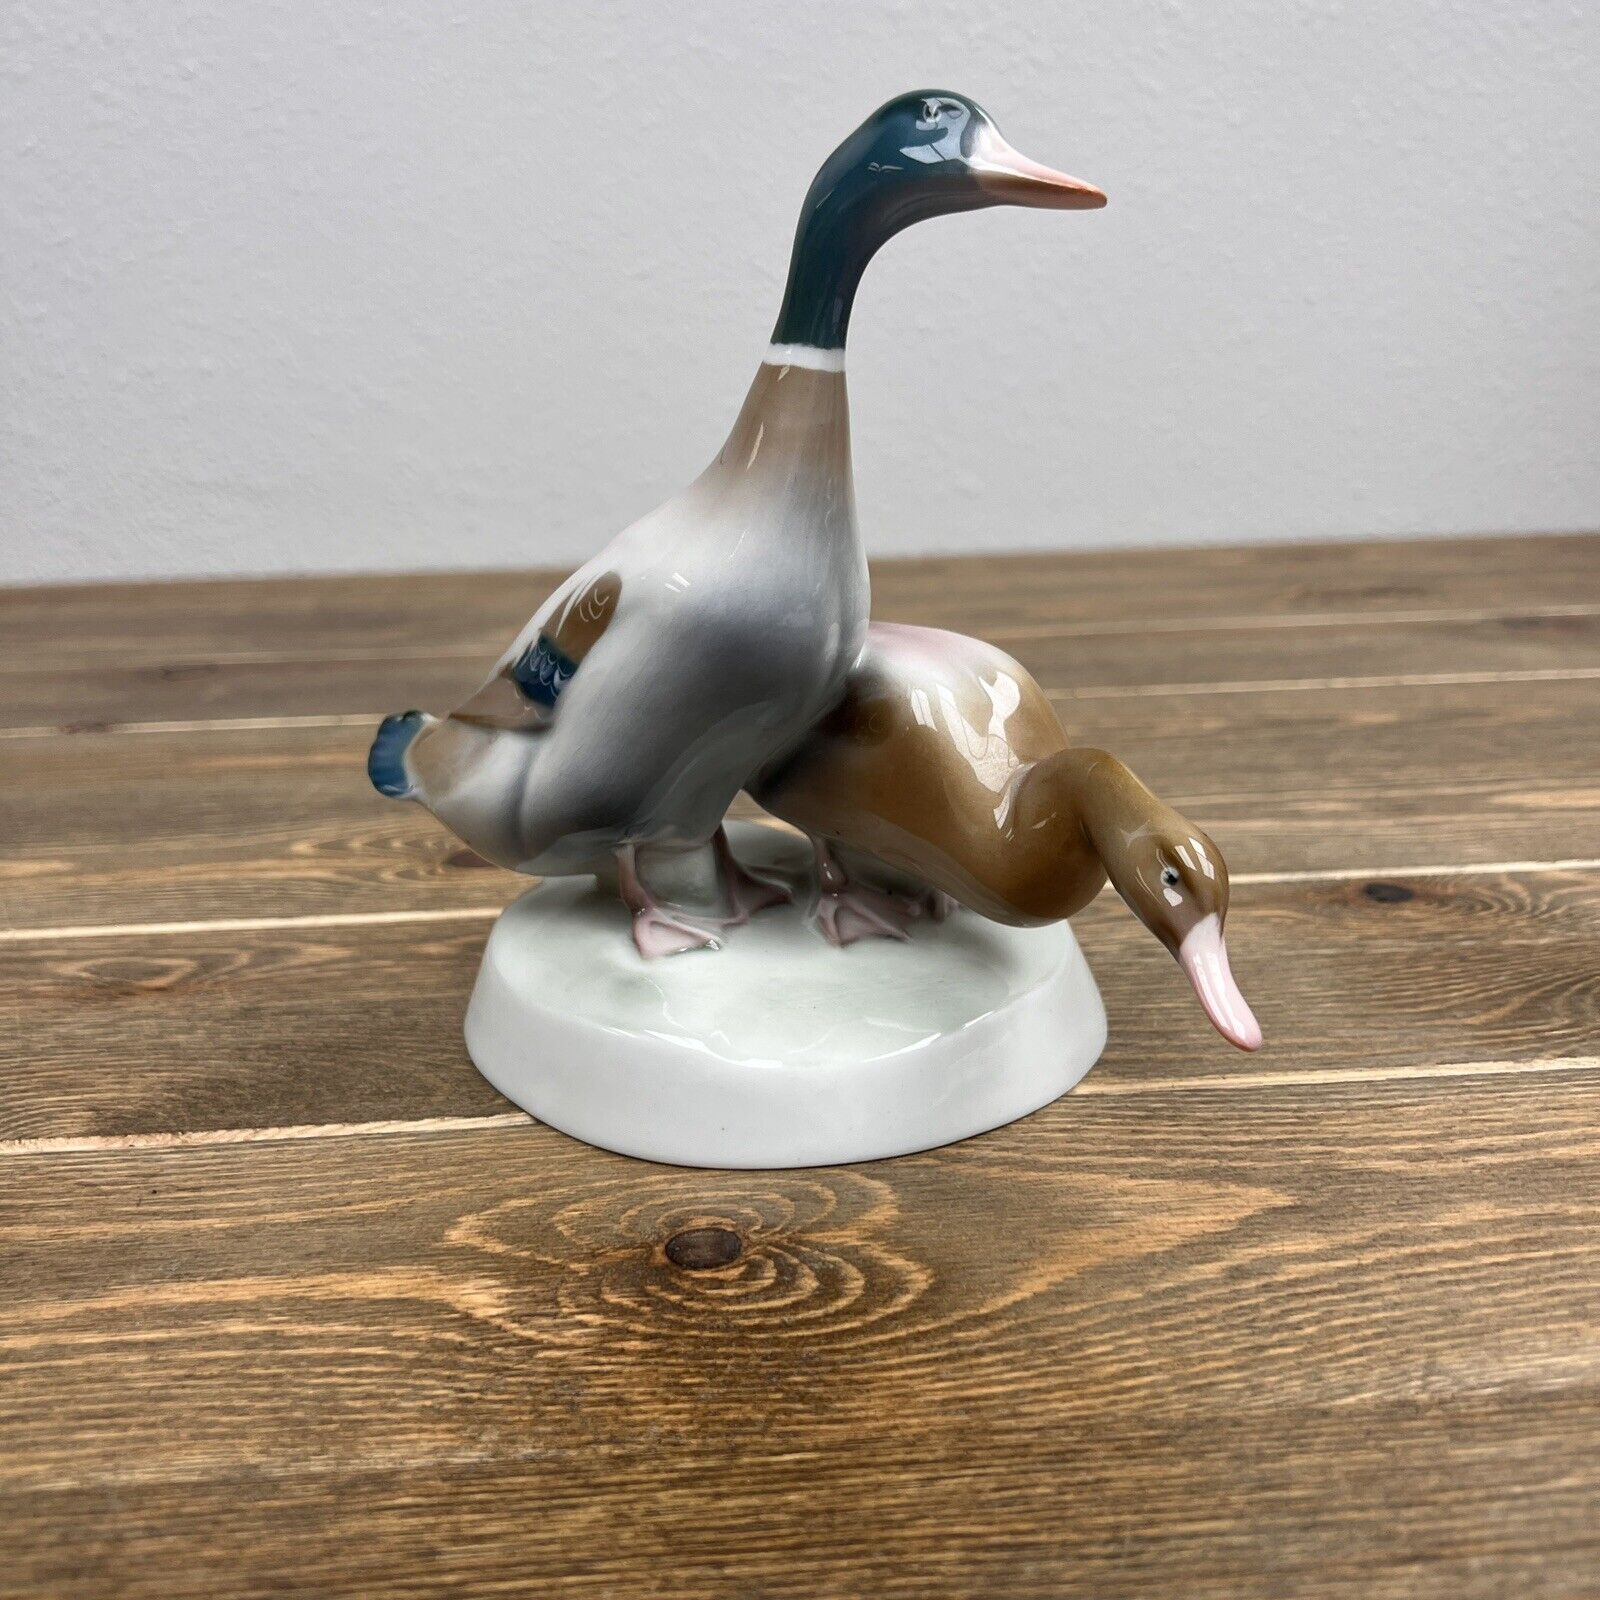 Zsolnay porcelain ducks, pair of Mallard ducks, porcelain glazed hand painted